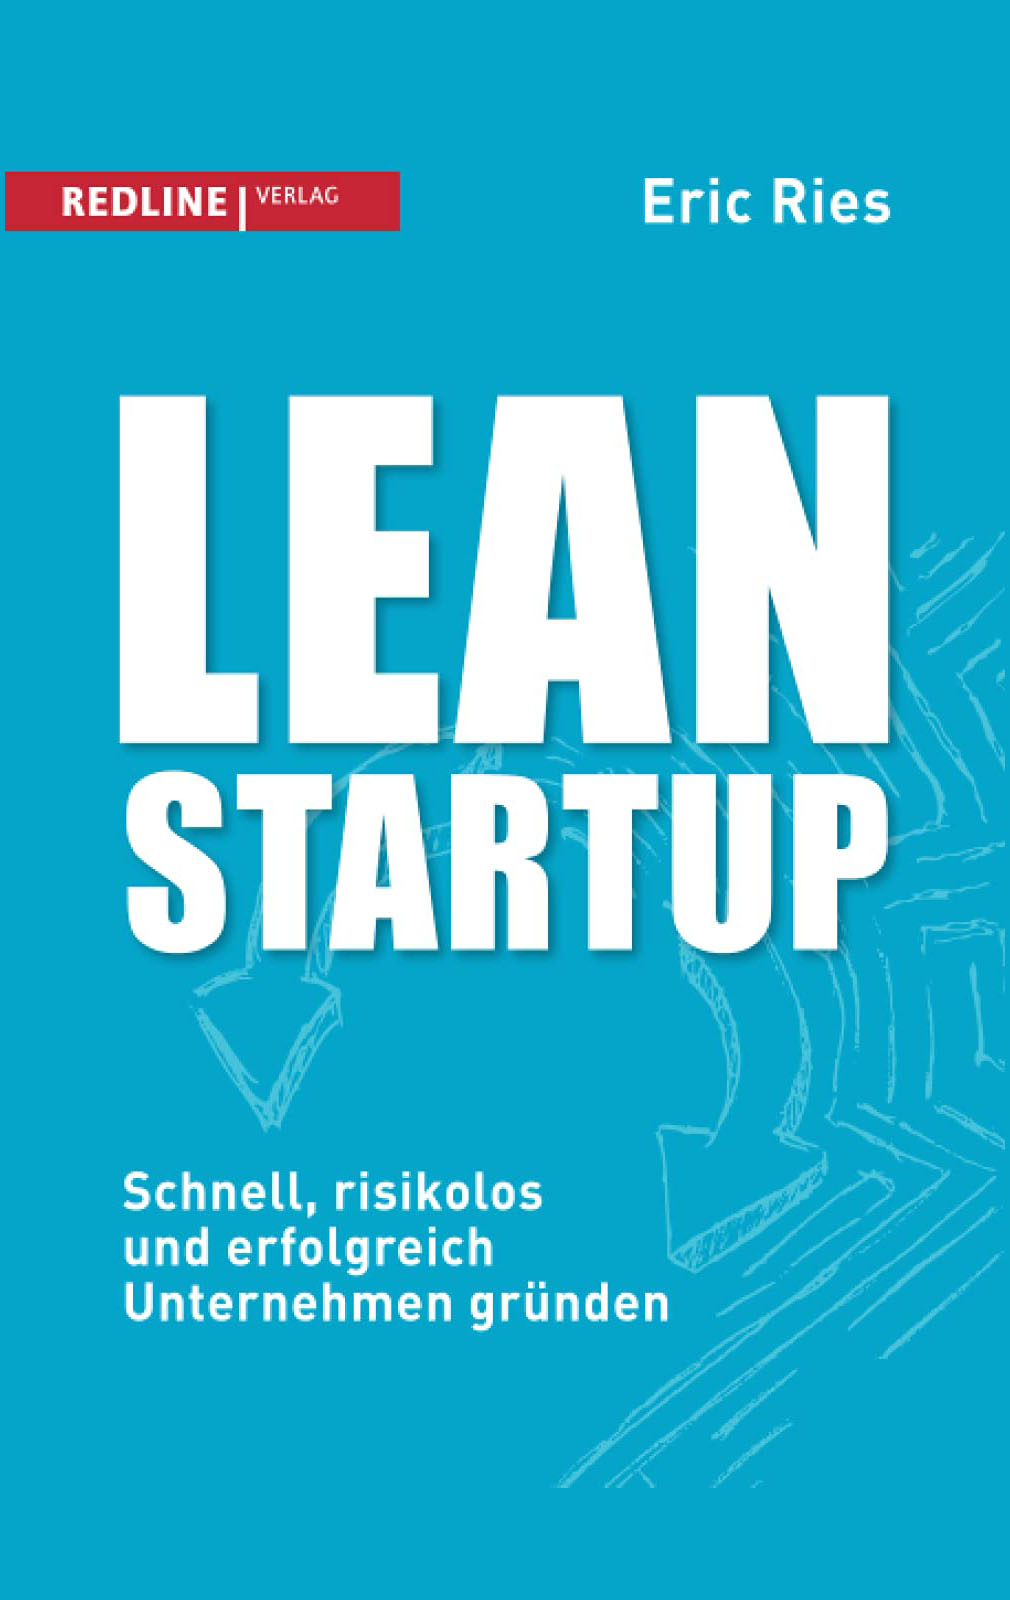 Lean StartUp